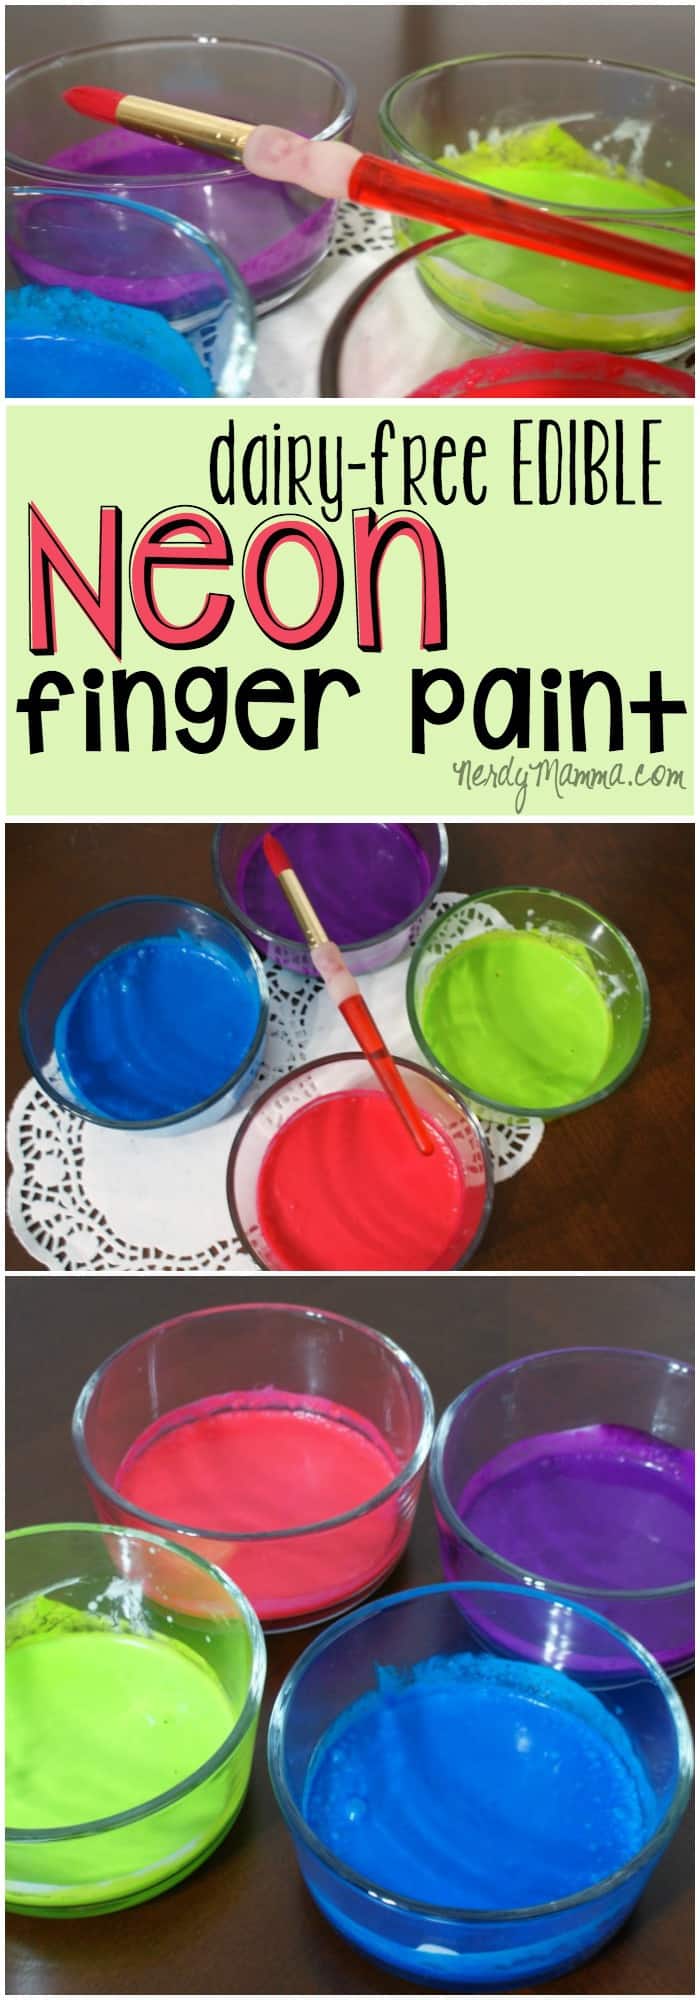 Dairy-Free Edible Neon Finger Paints